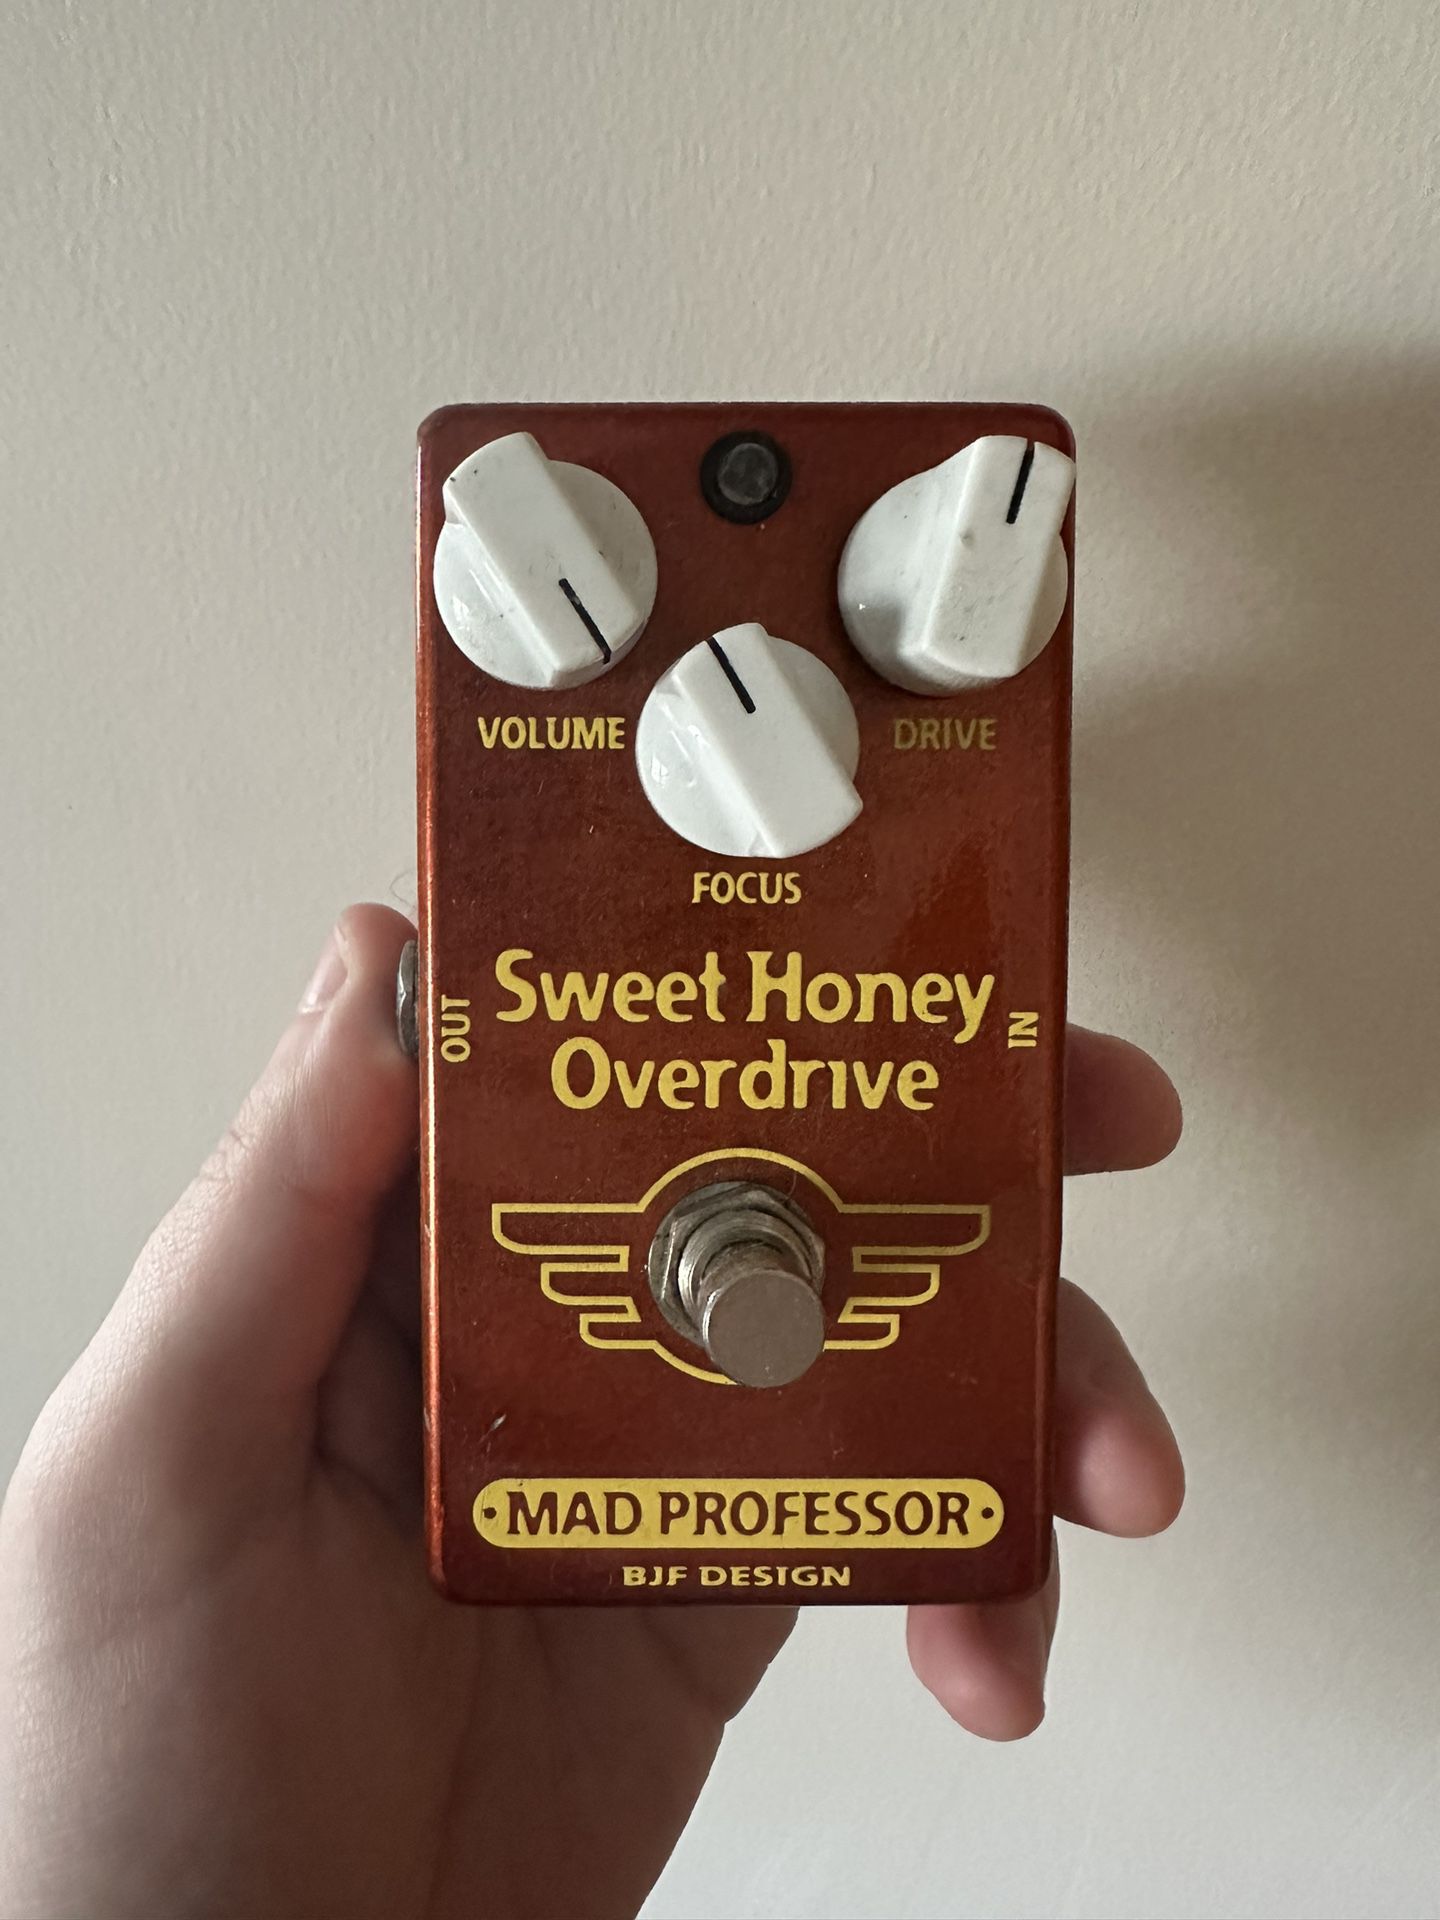 Mad Professor Sweet Honey Overdrive Pedal for Sale in Bellingham